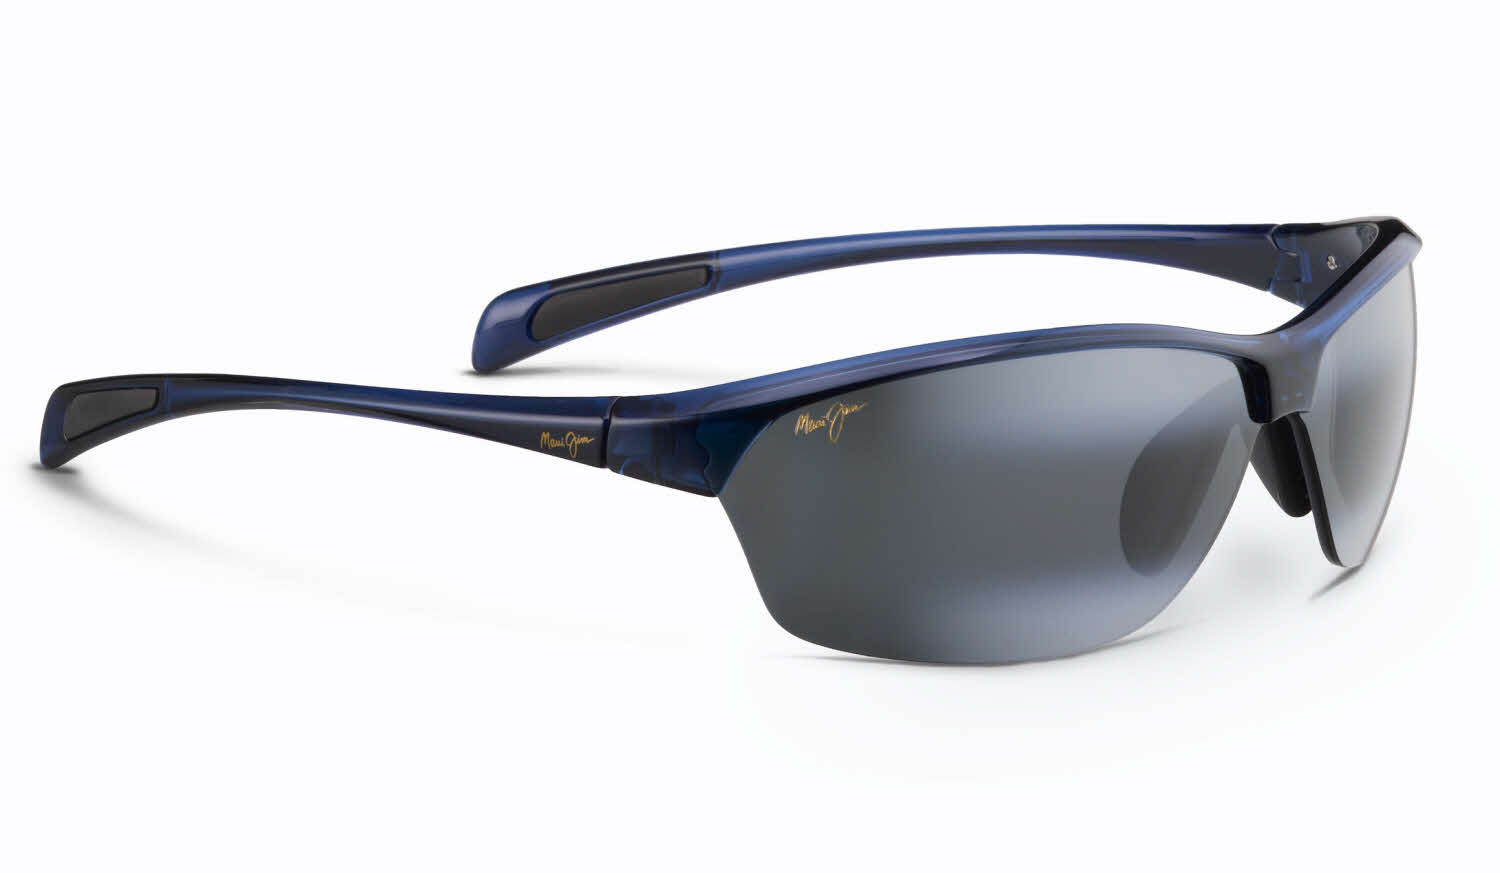 Maui Jim Hot Sands-426 Sunglasses